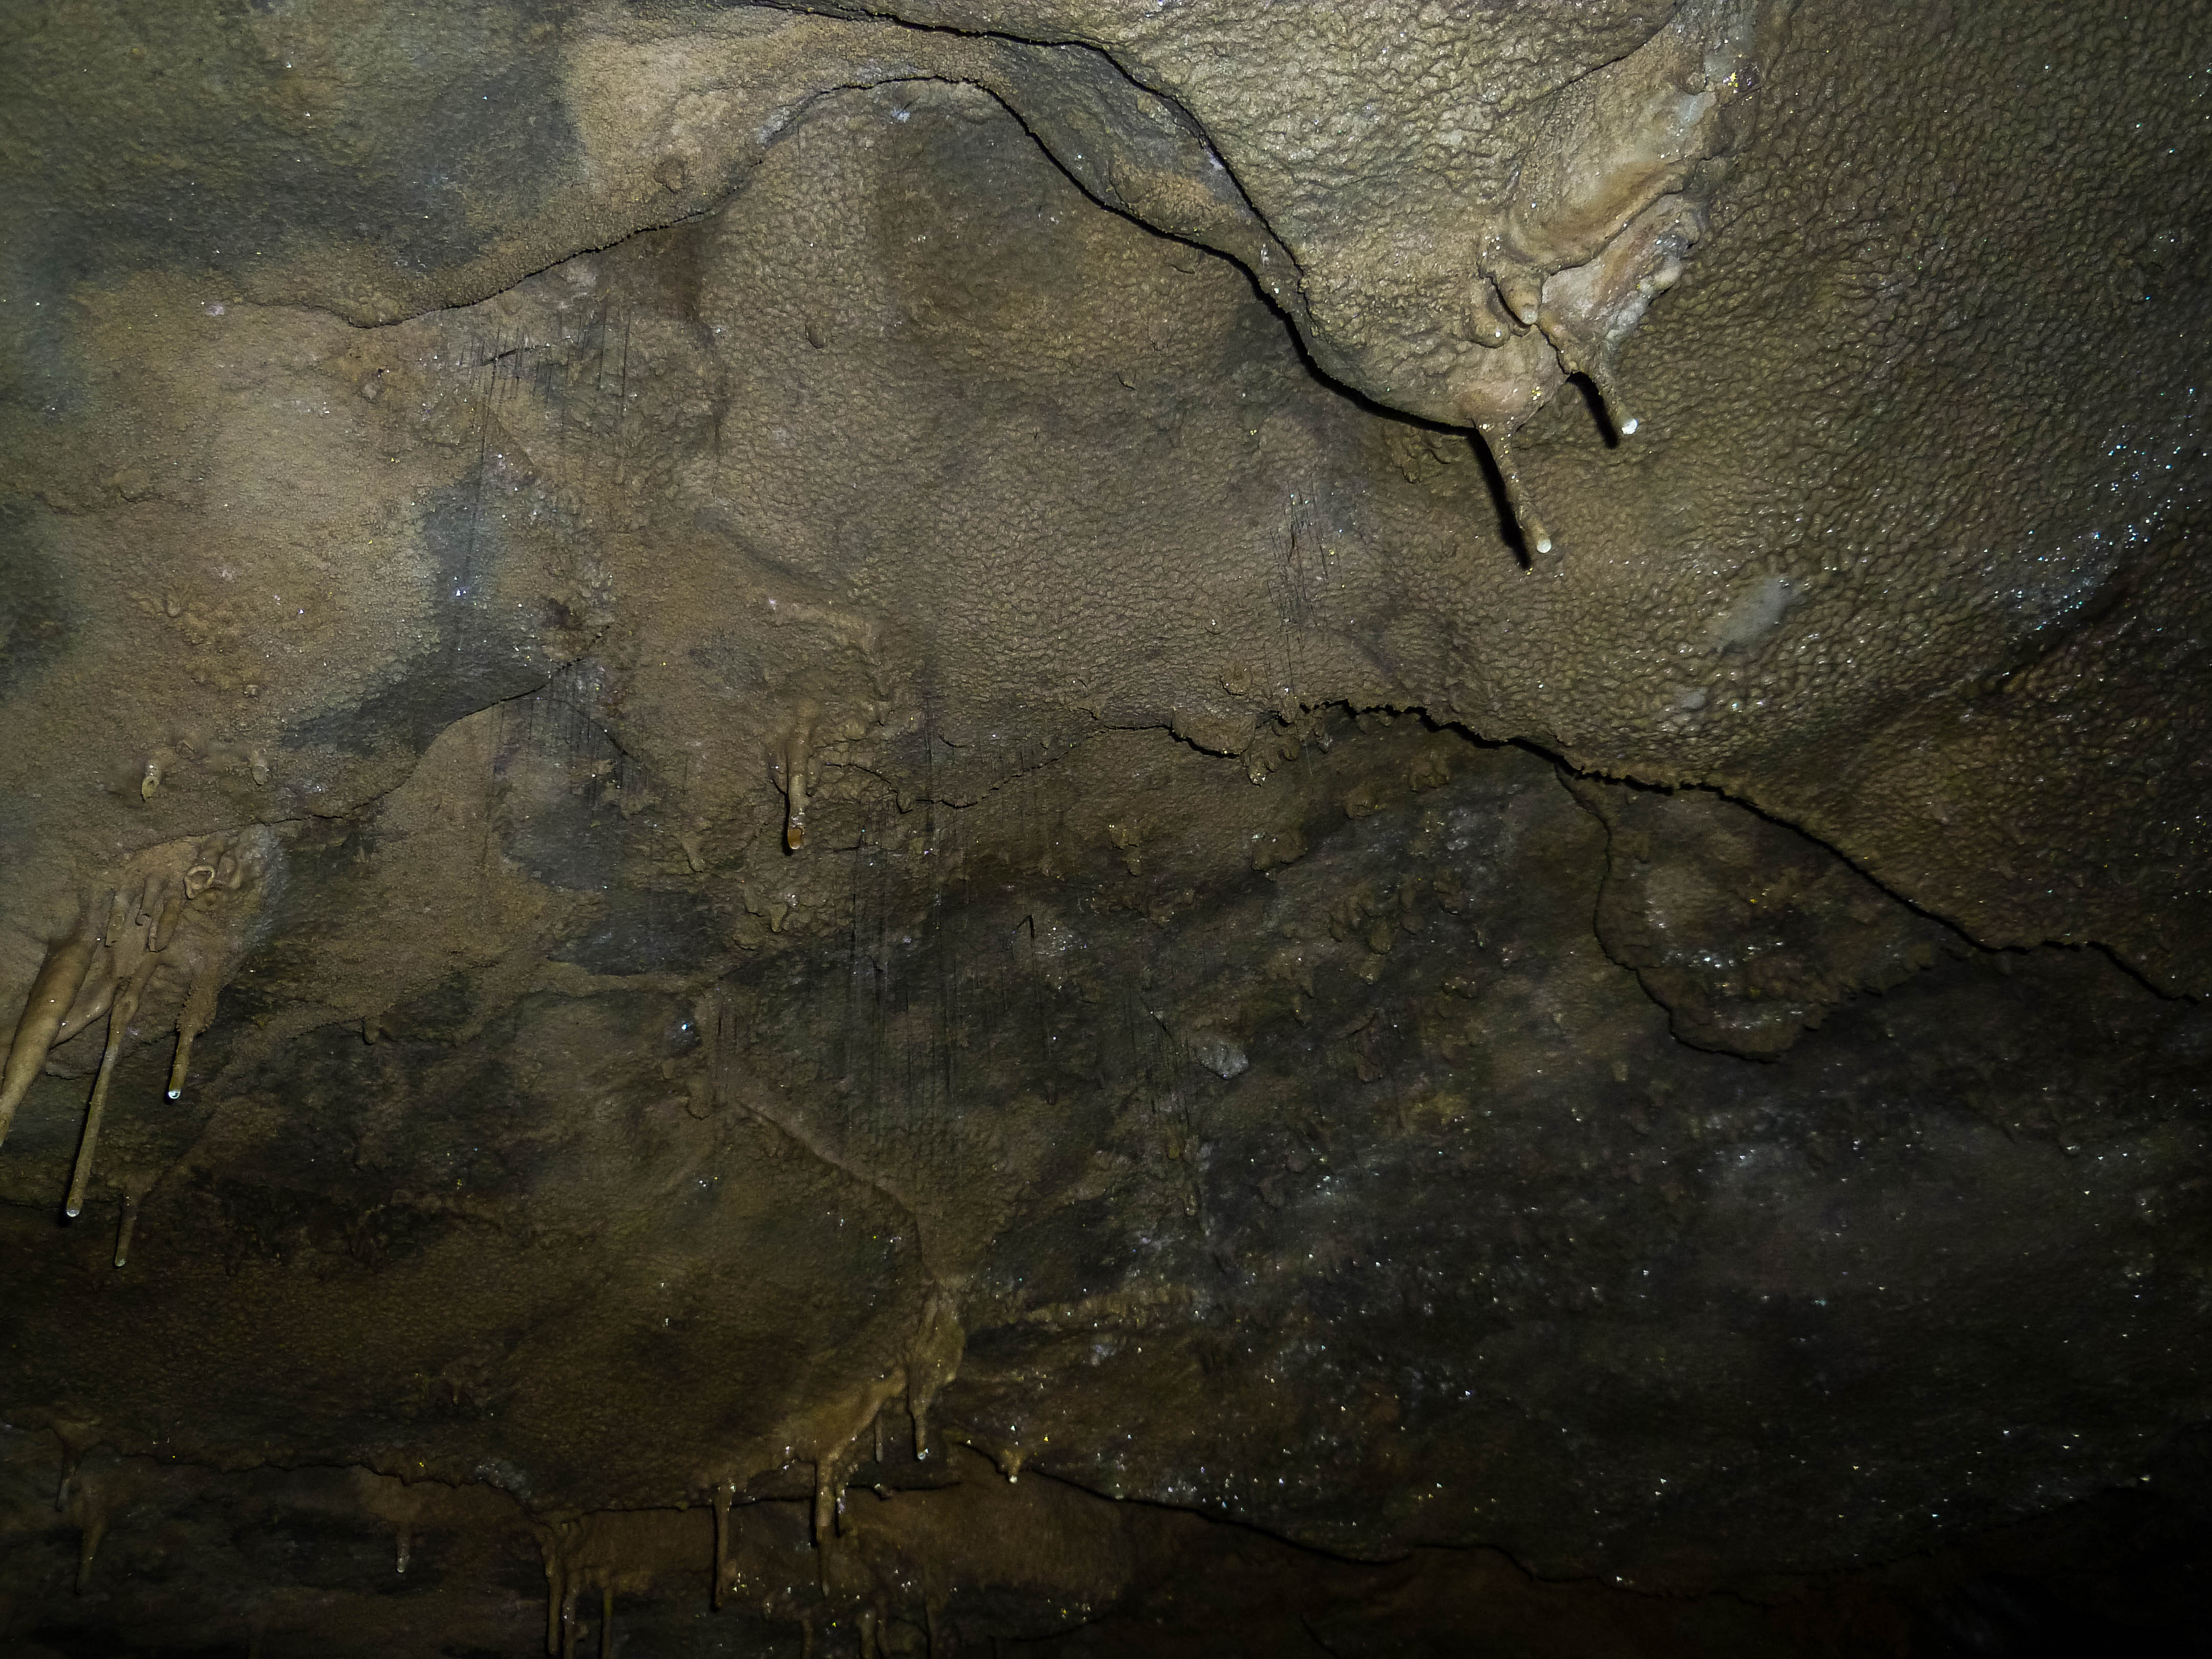 Glowworm caves in Waitomo